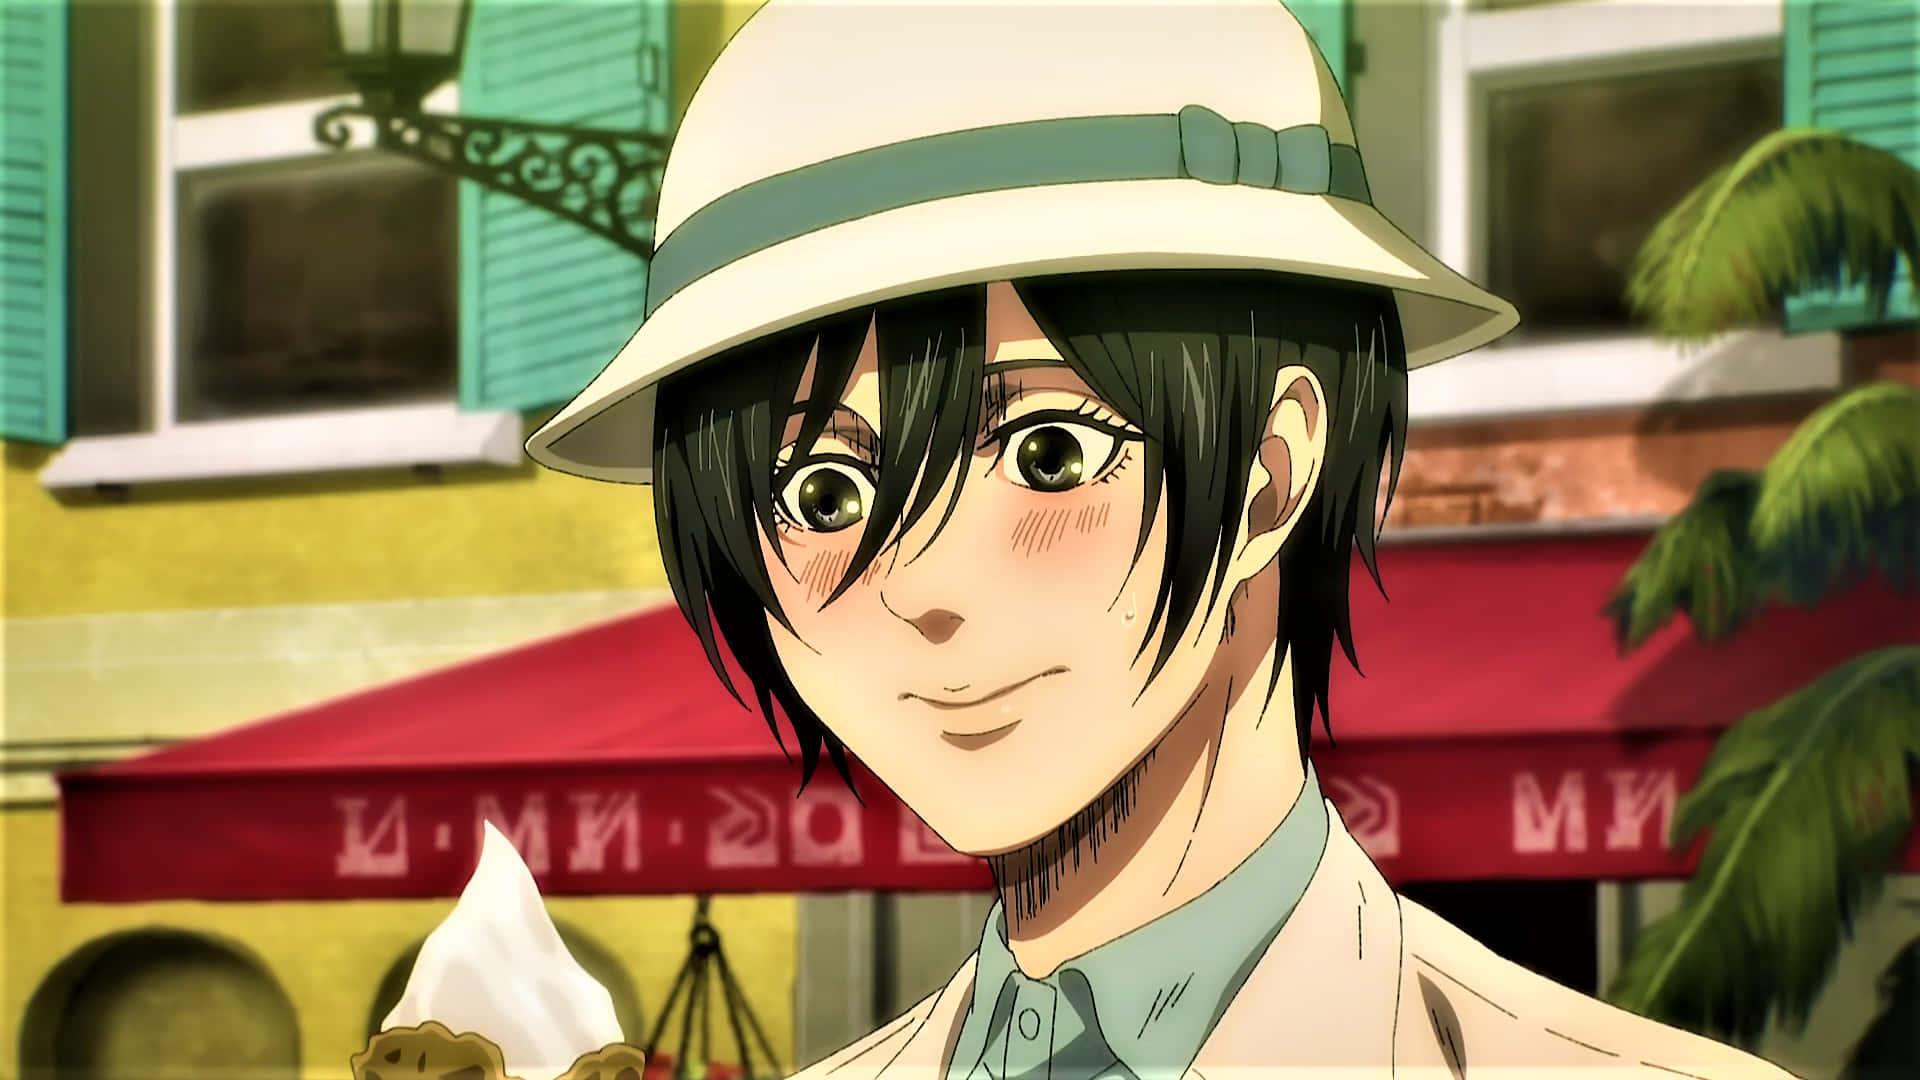 Blushing Anime Mikasa Ackerman Background